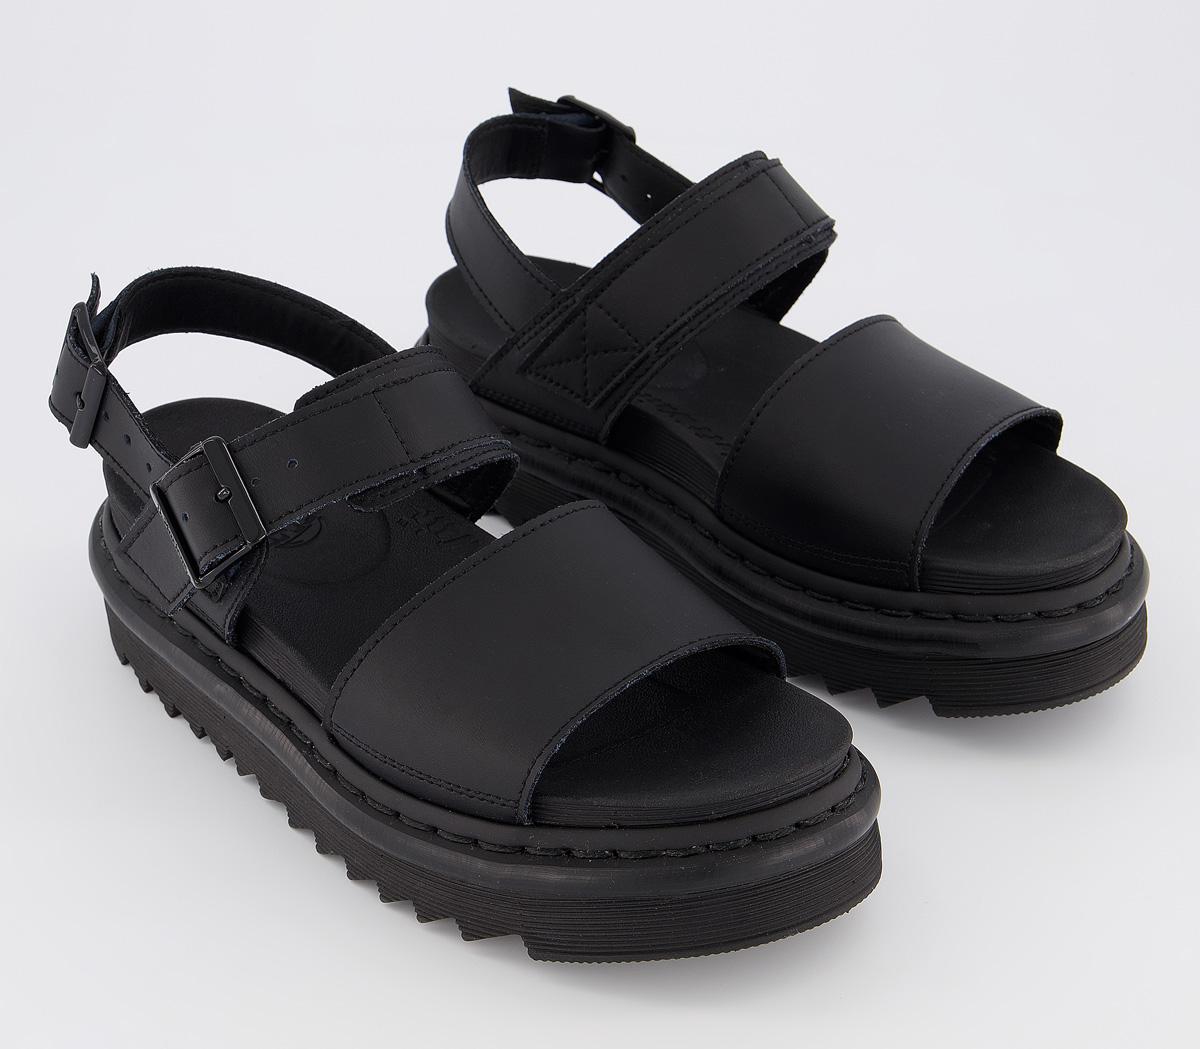 Dr. Martens Voss Sandals Black Hydro - Women’s Sandals